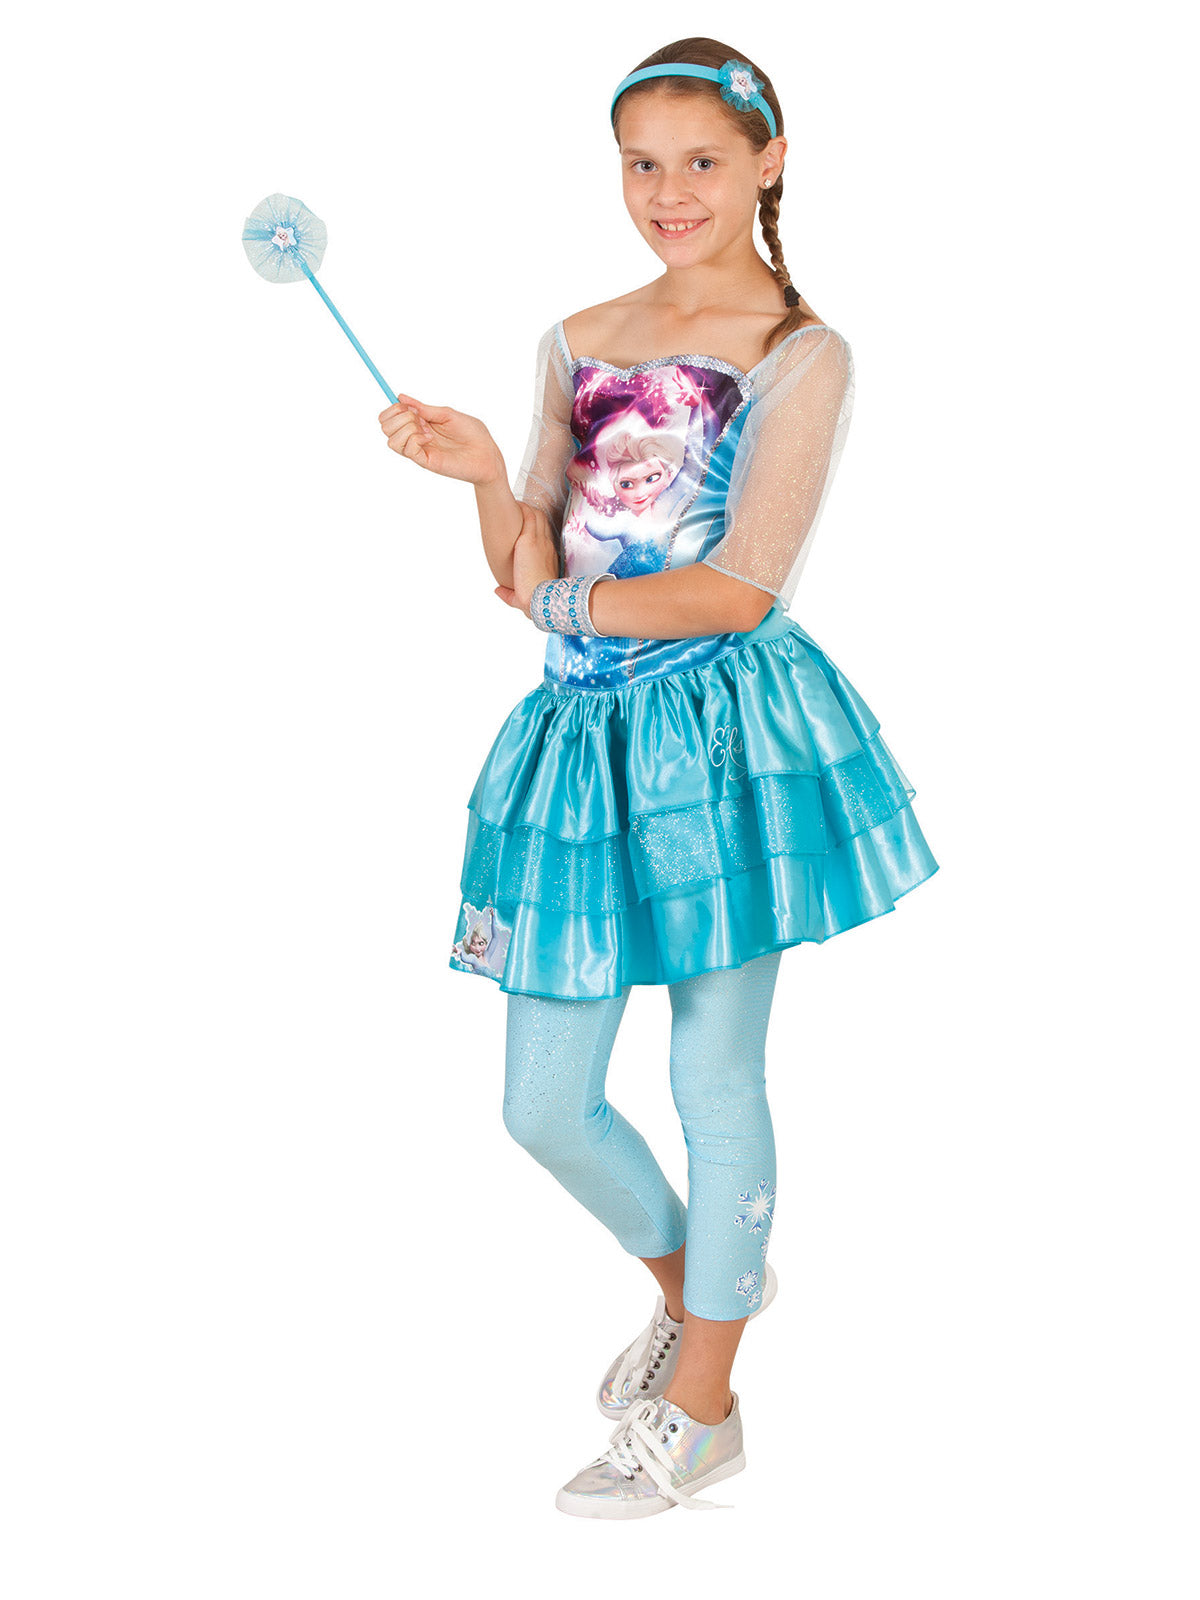 Frozen Elsa Fabric Wrist Band child Girls Costume Accessory